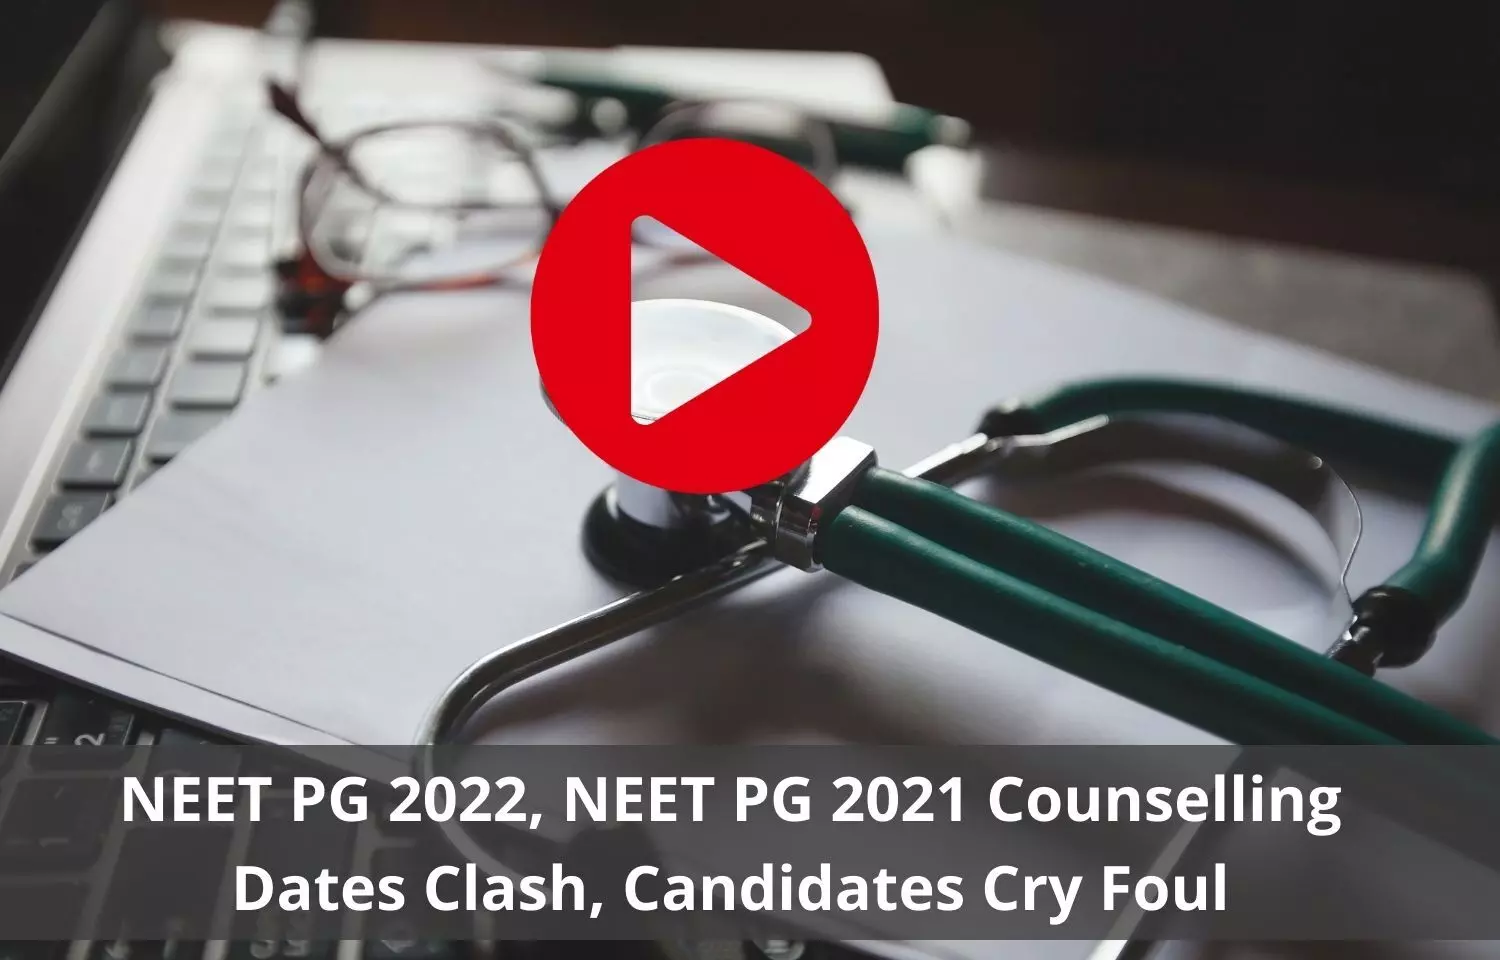 NEET PG 2022, NEET PG 2021 counselling dates clash, students demand gap